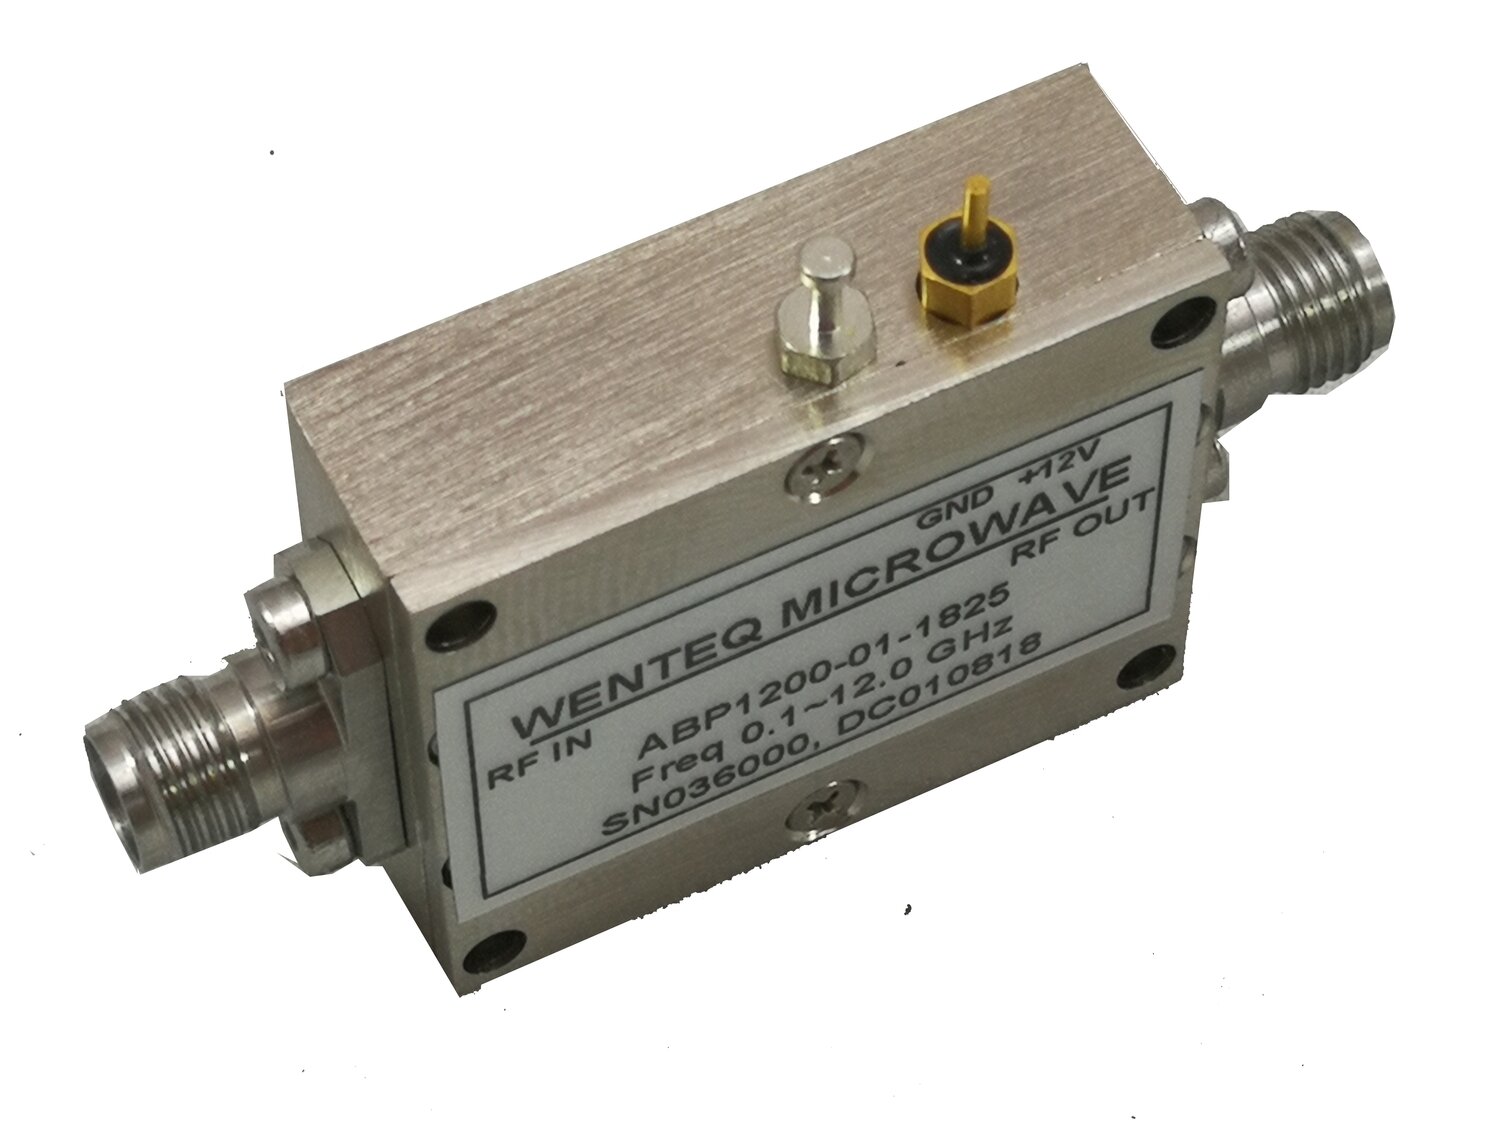 Broadband Power Amplifier
Abp1200-01-1825